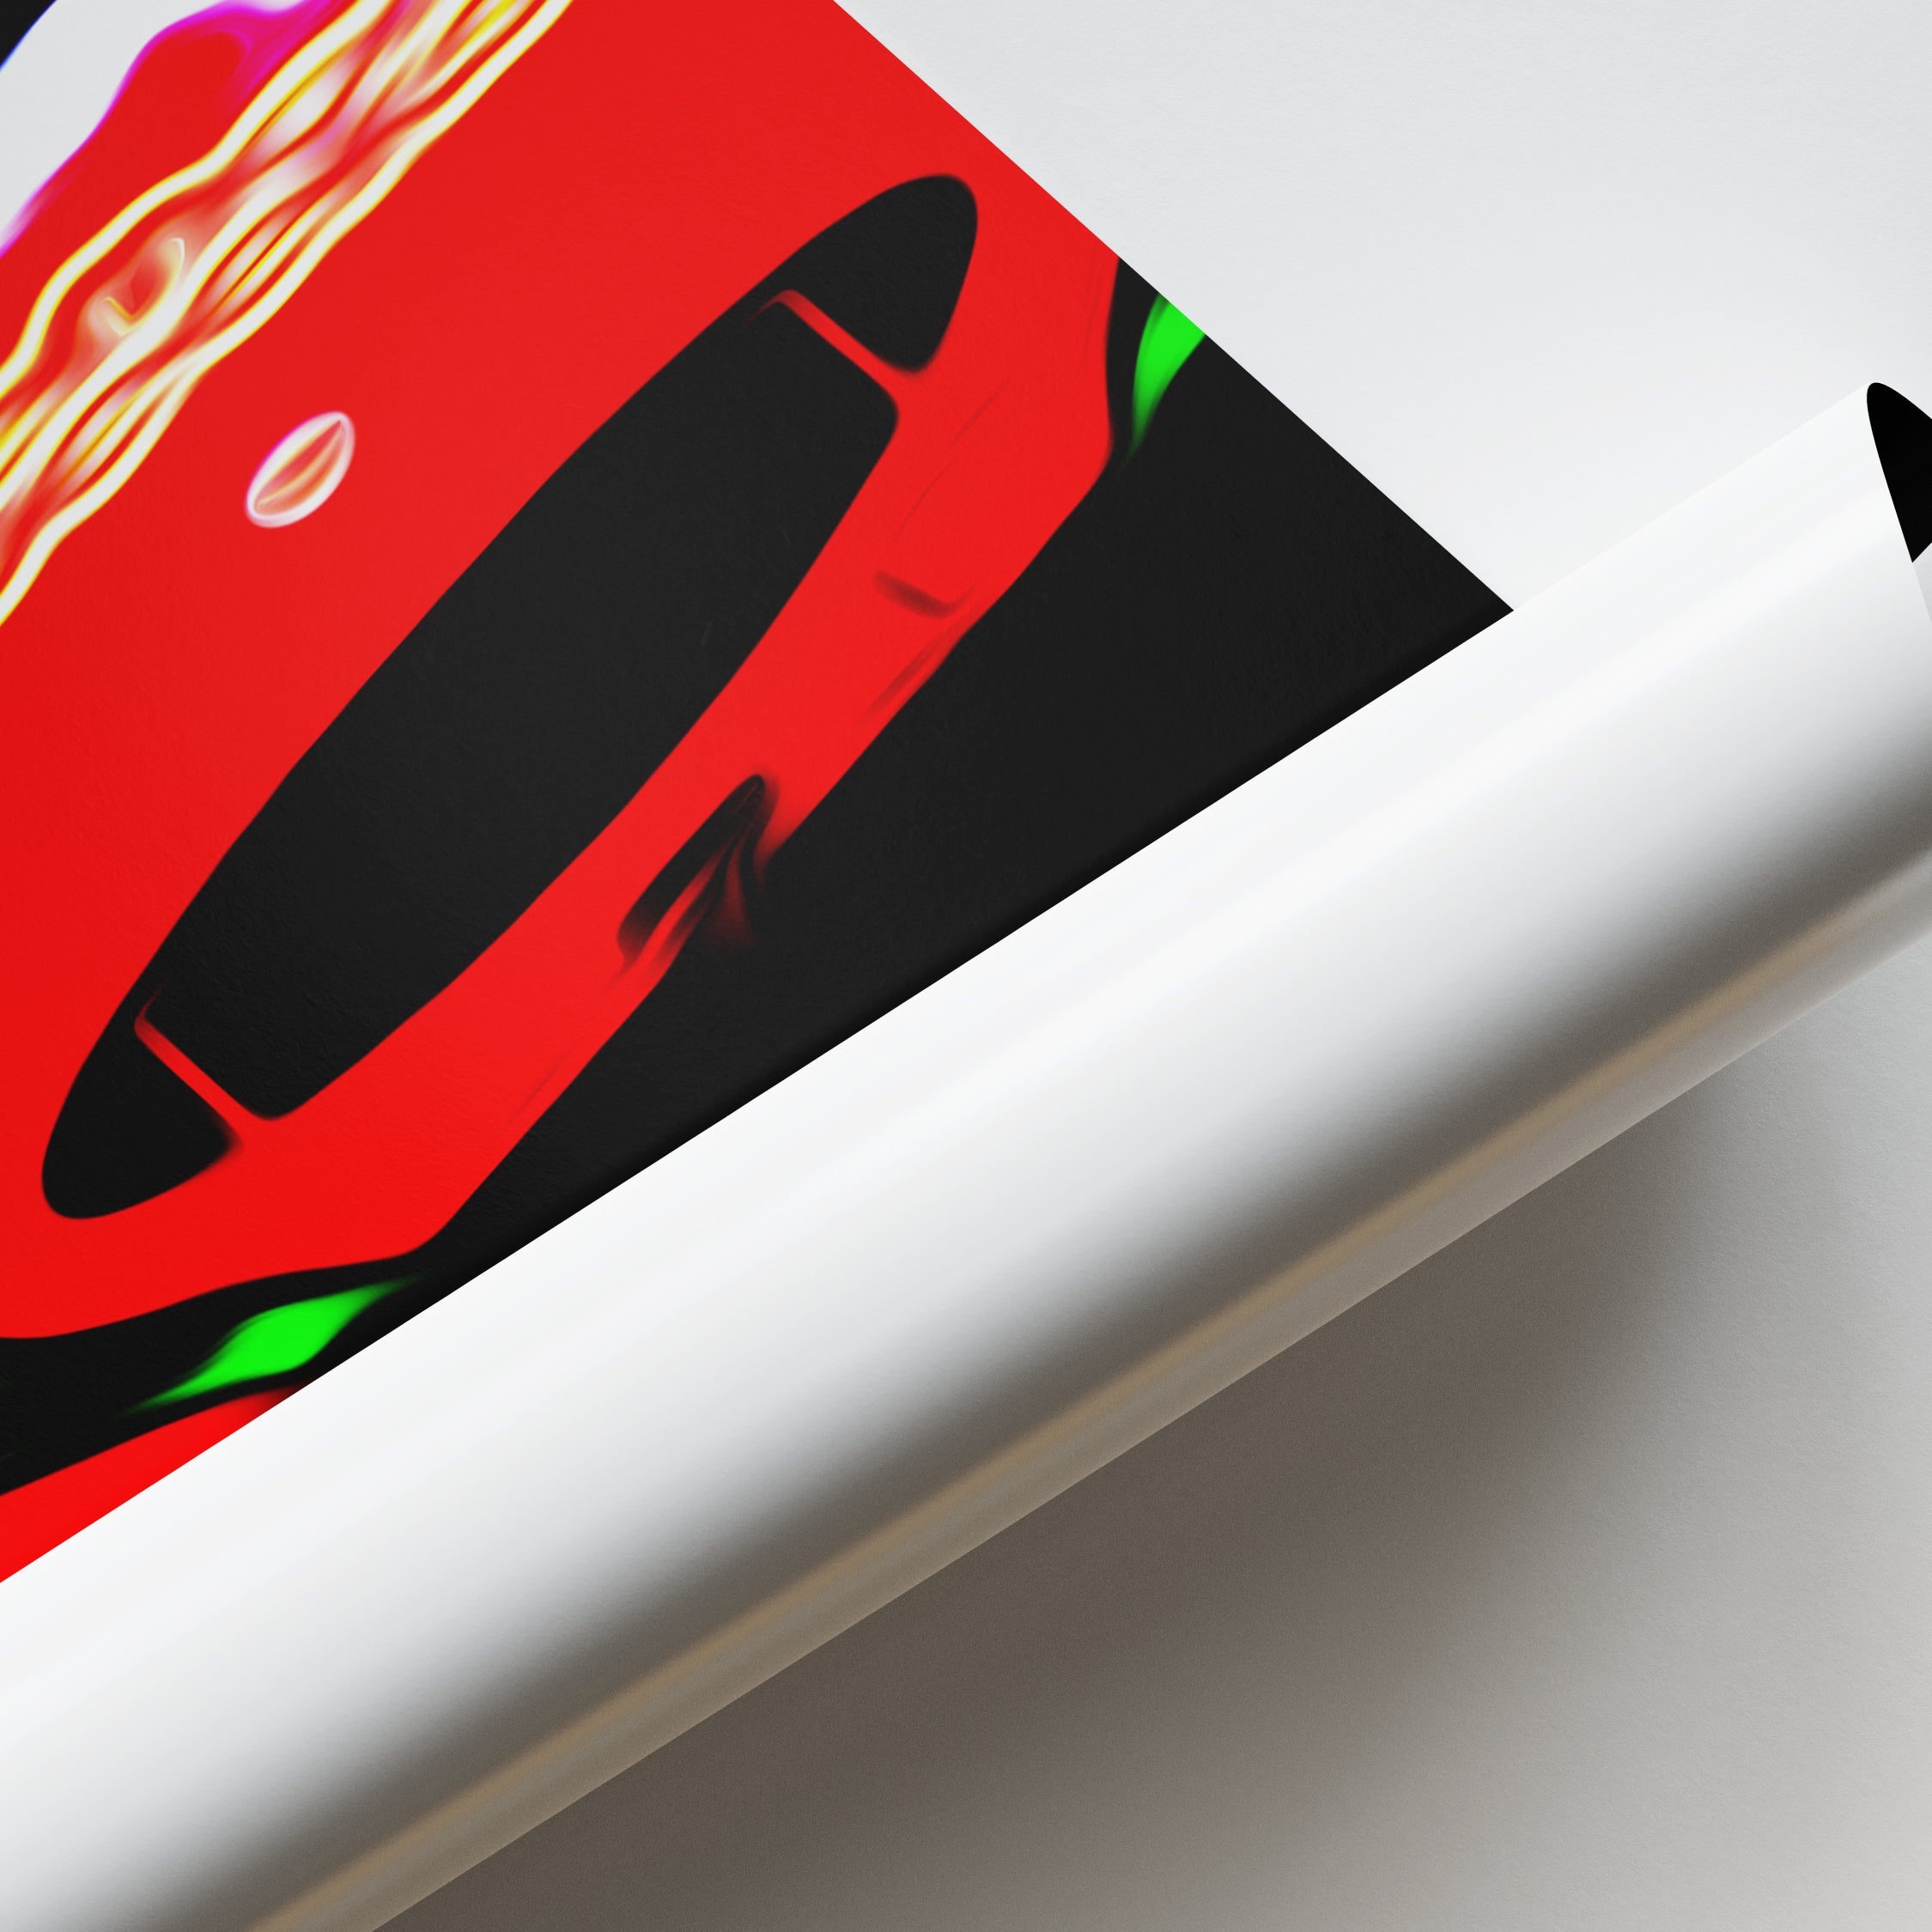 Ginetta G40 GT5 - Race Car Poster Print Close Up